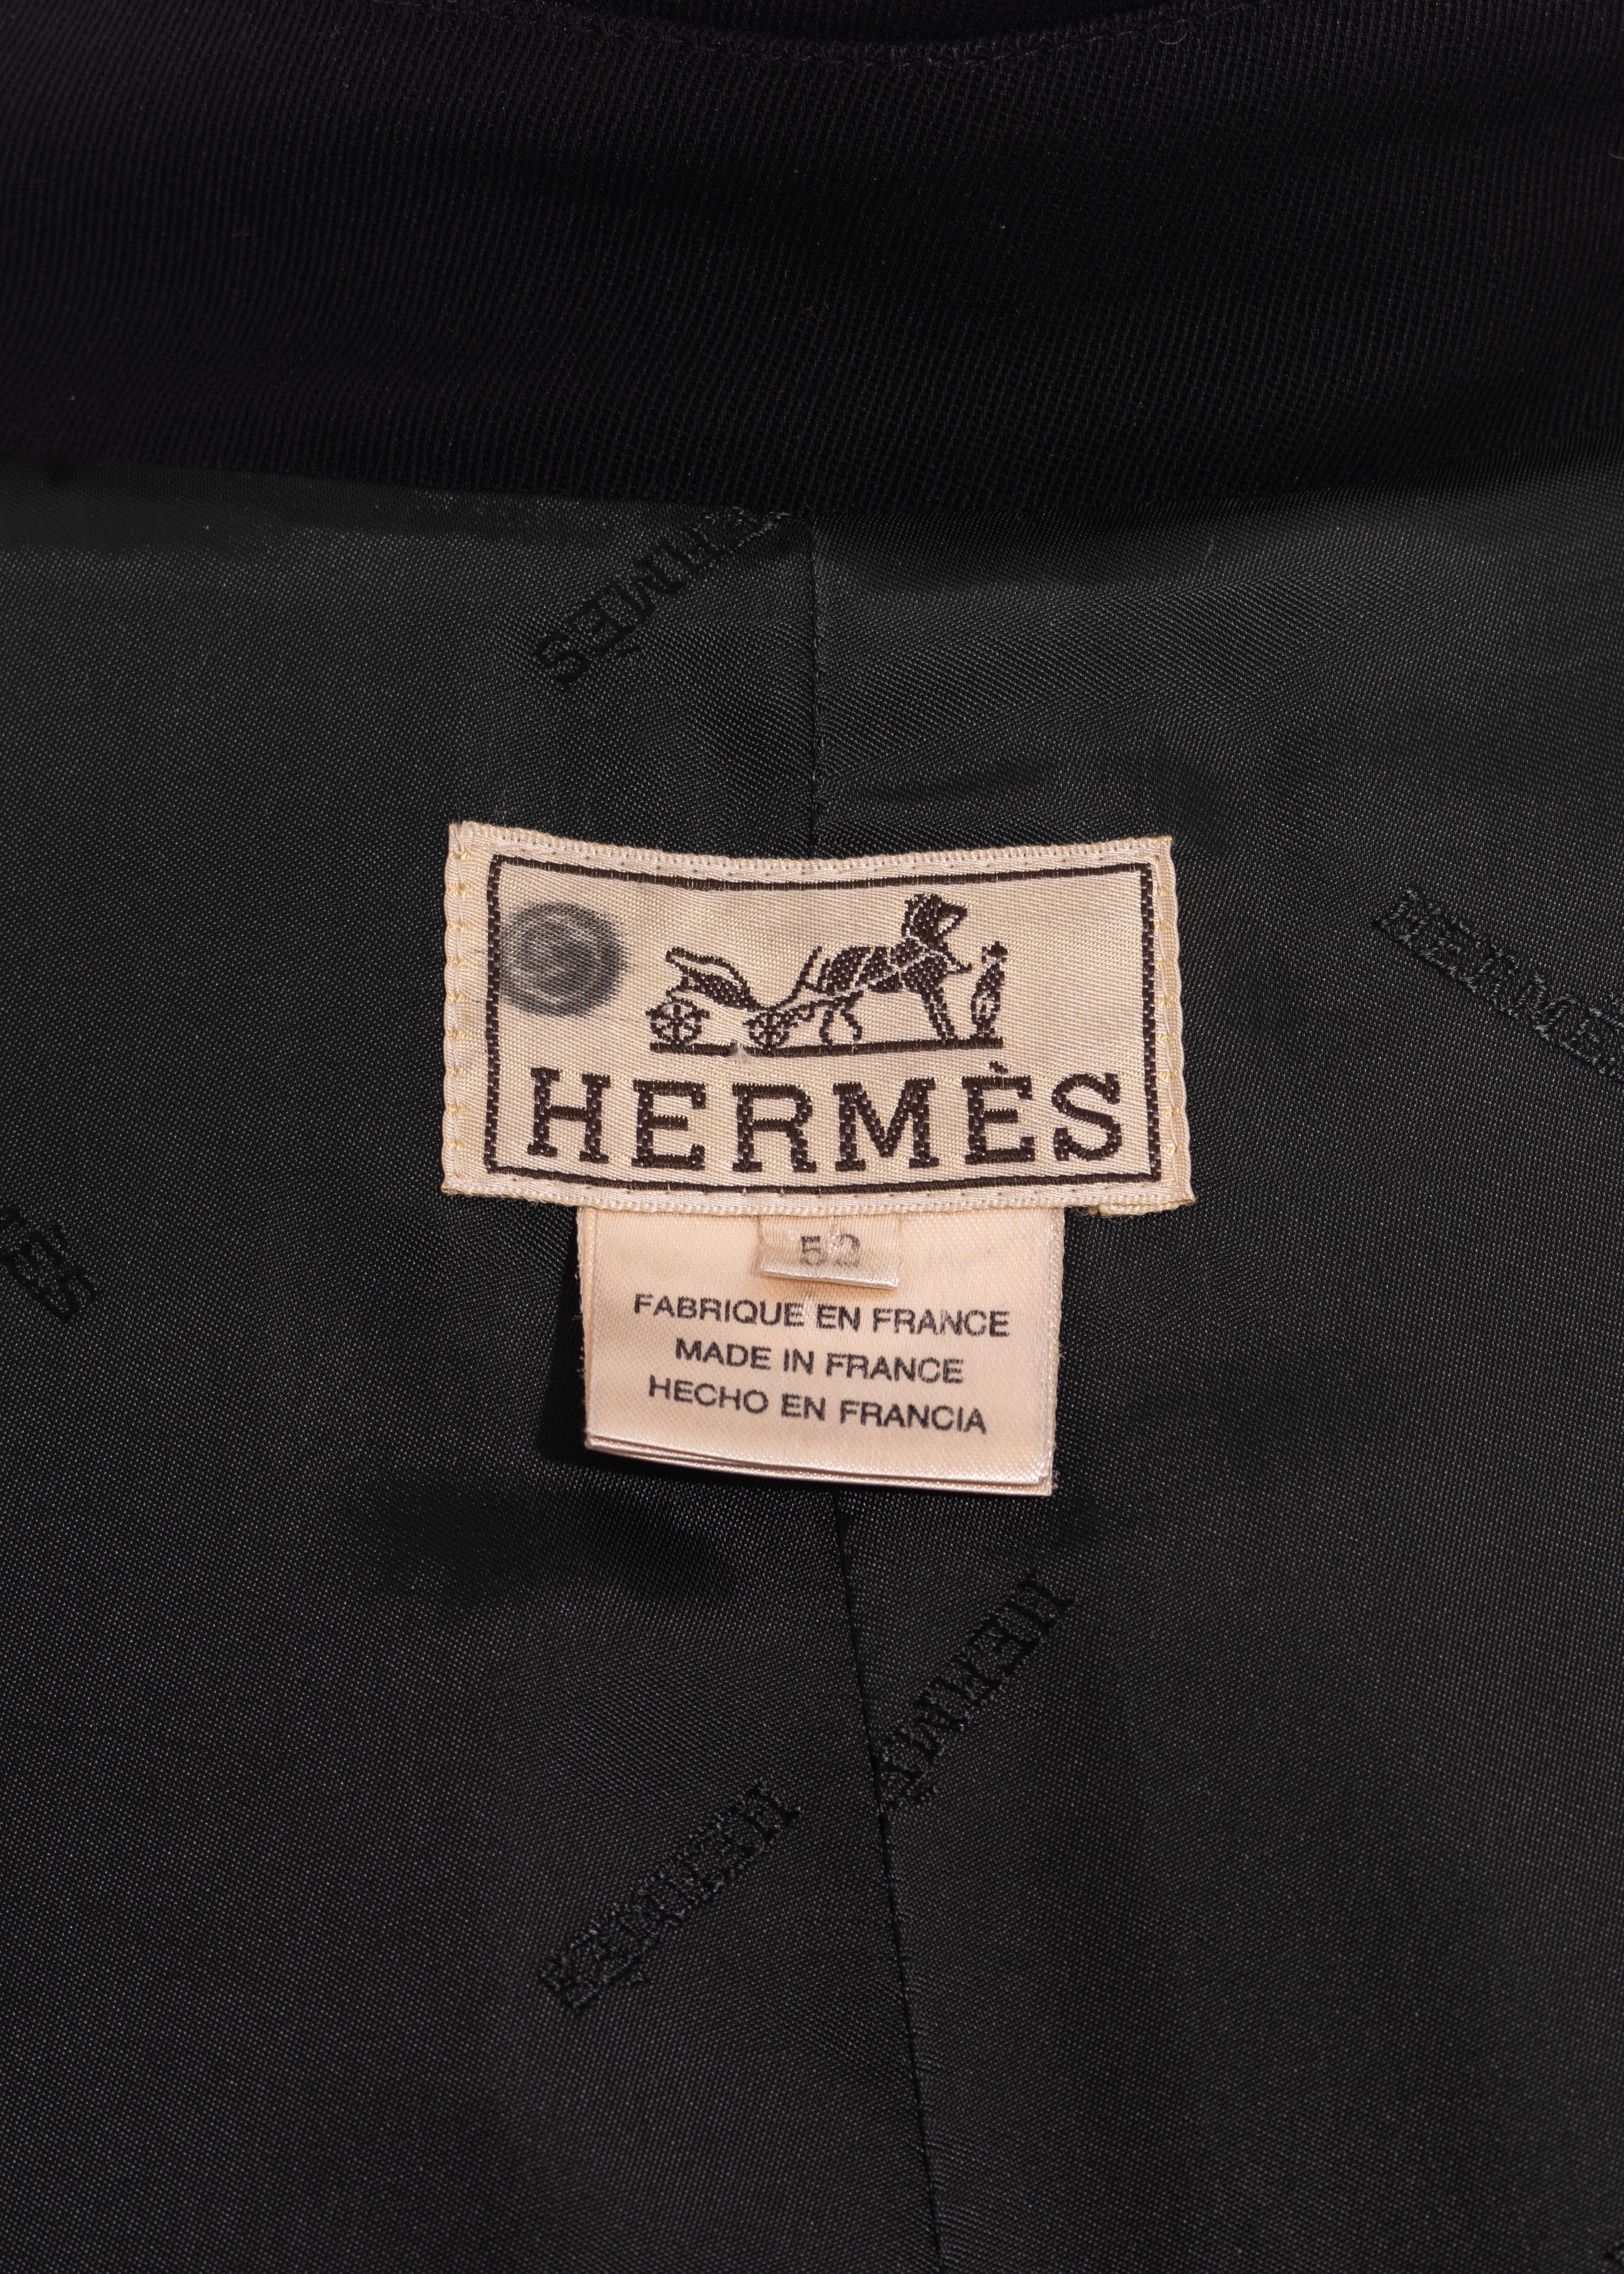 Men's Hermes black wool belted trench coat, c. 1980s 2